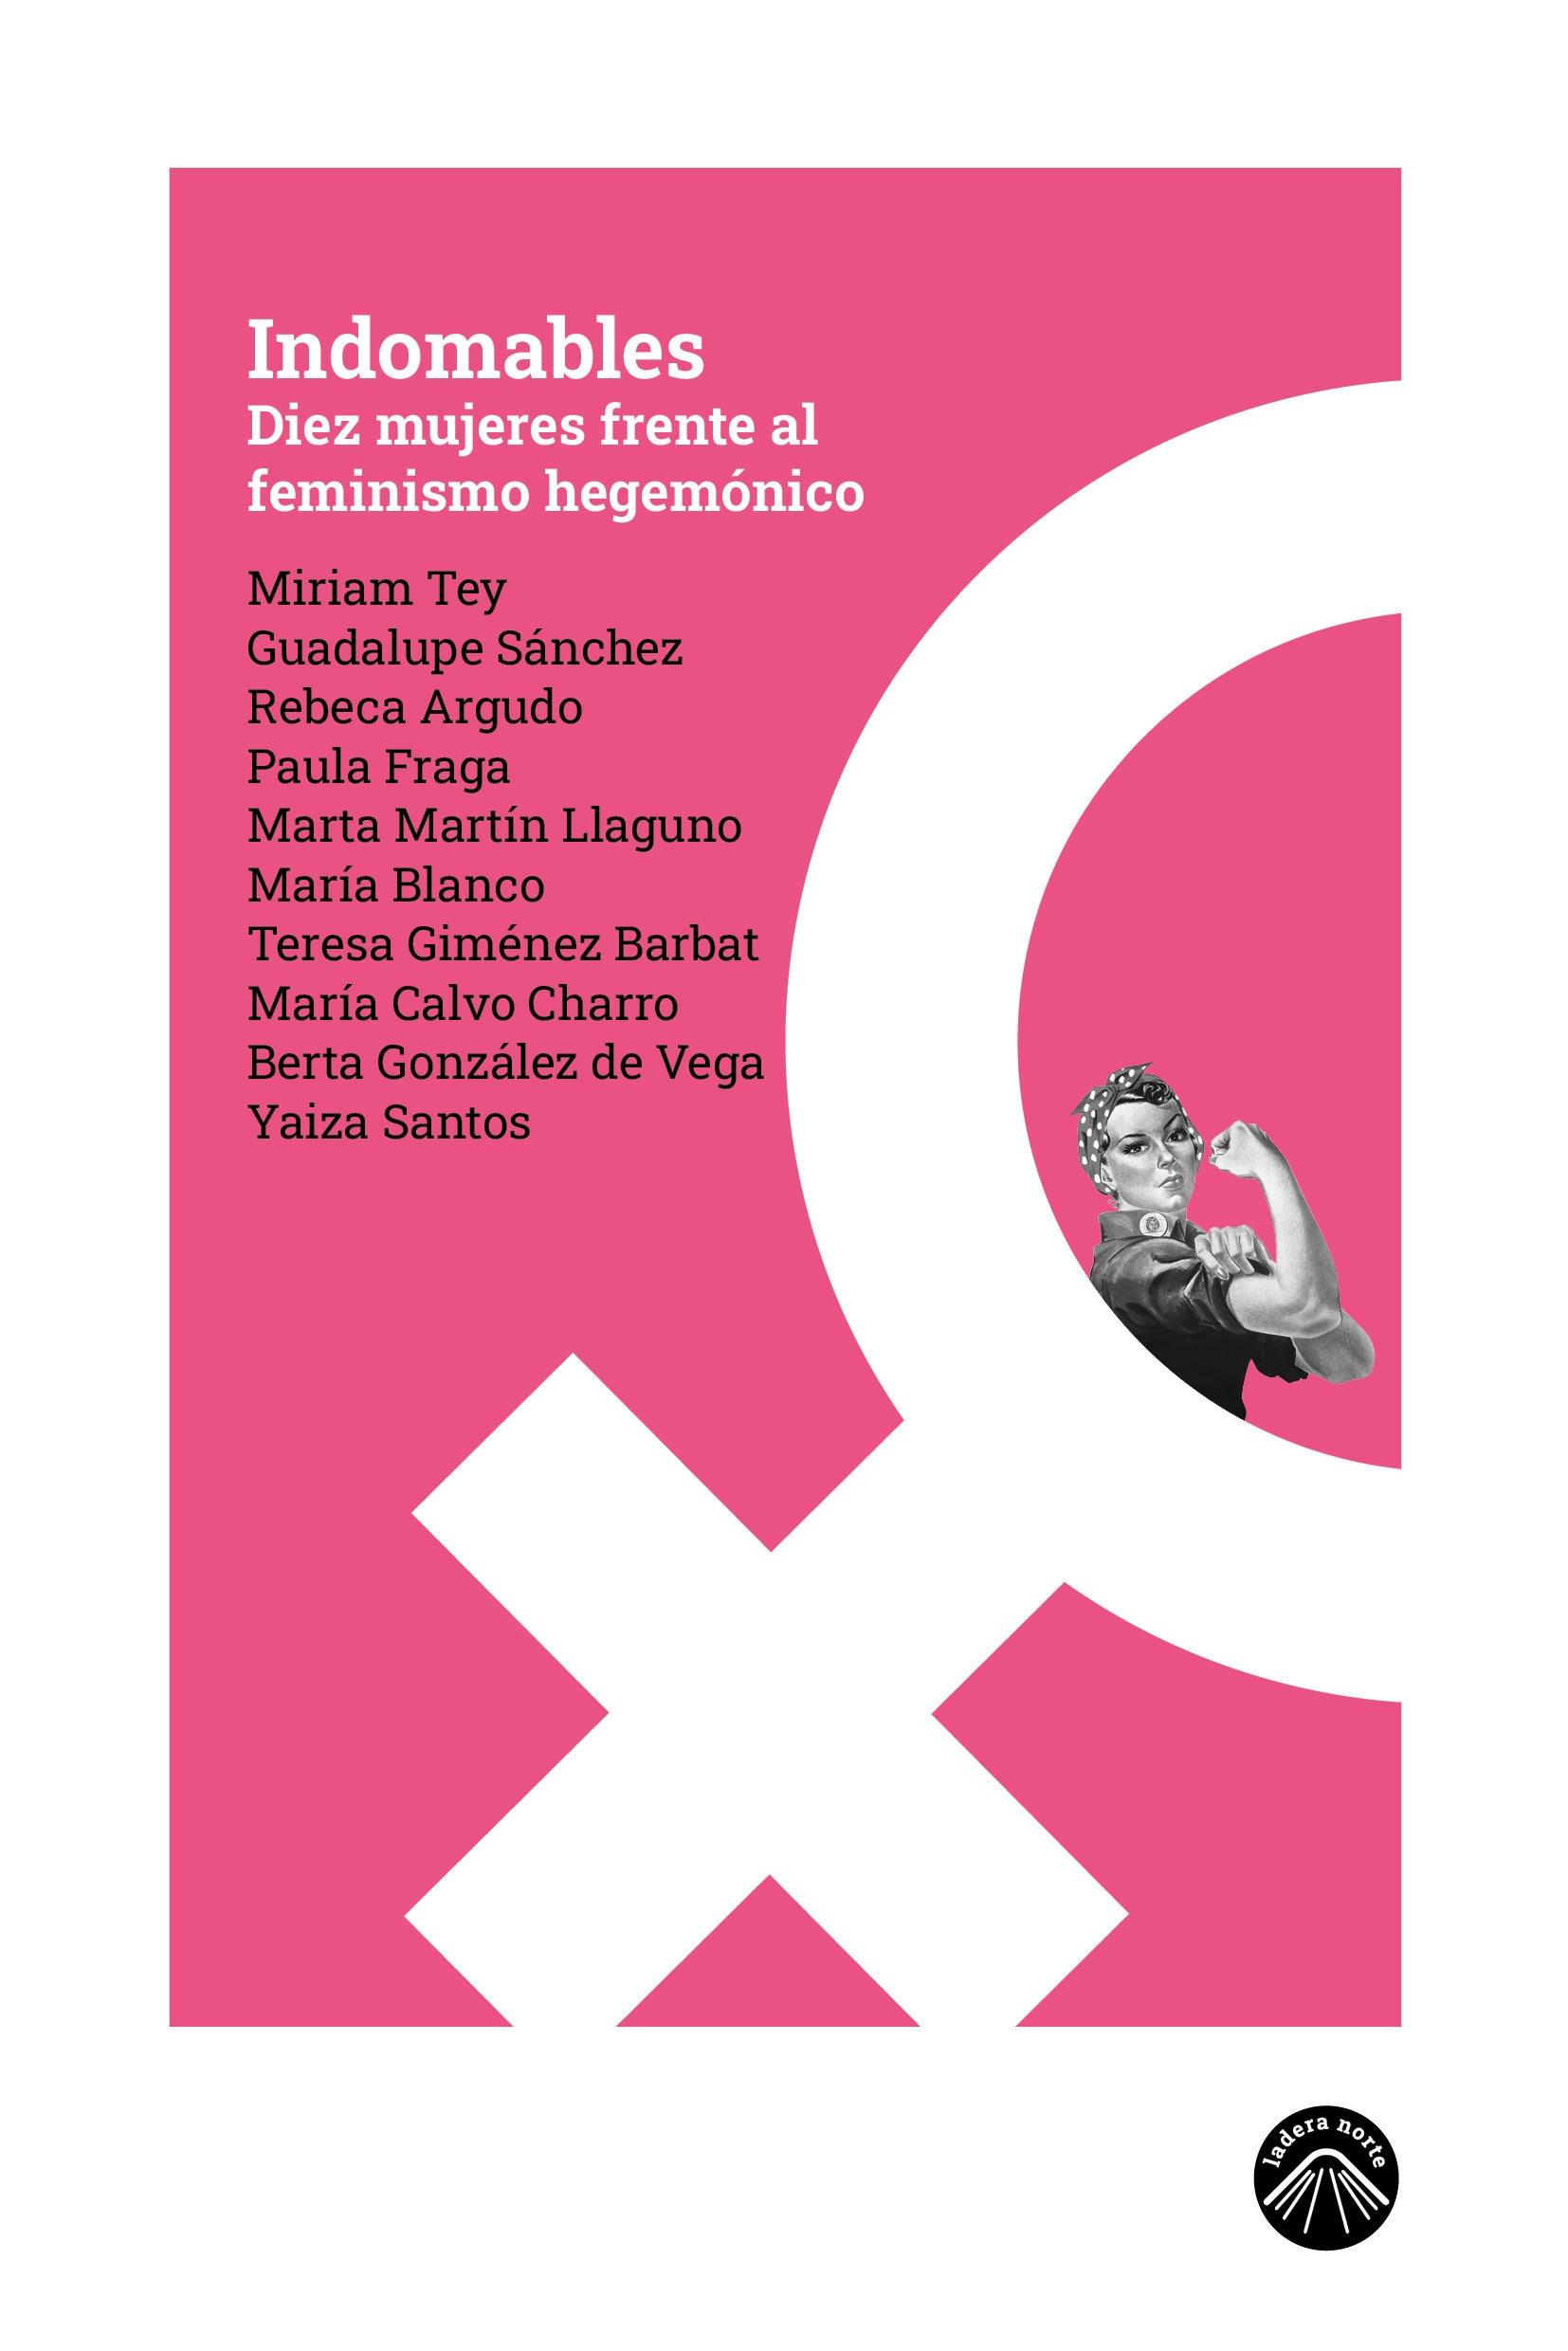 INDOMABLES "DIEZ MUJERES FRENTE AL FEMINISMO HEGEMONICO"